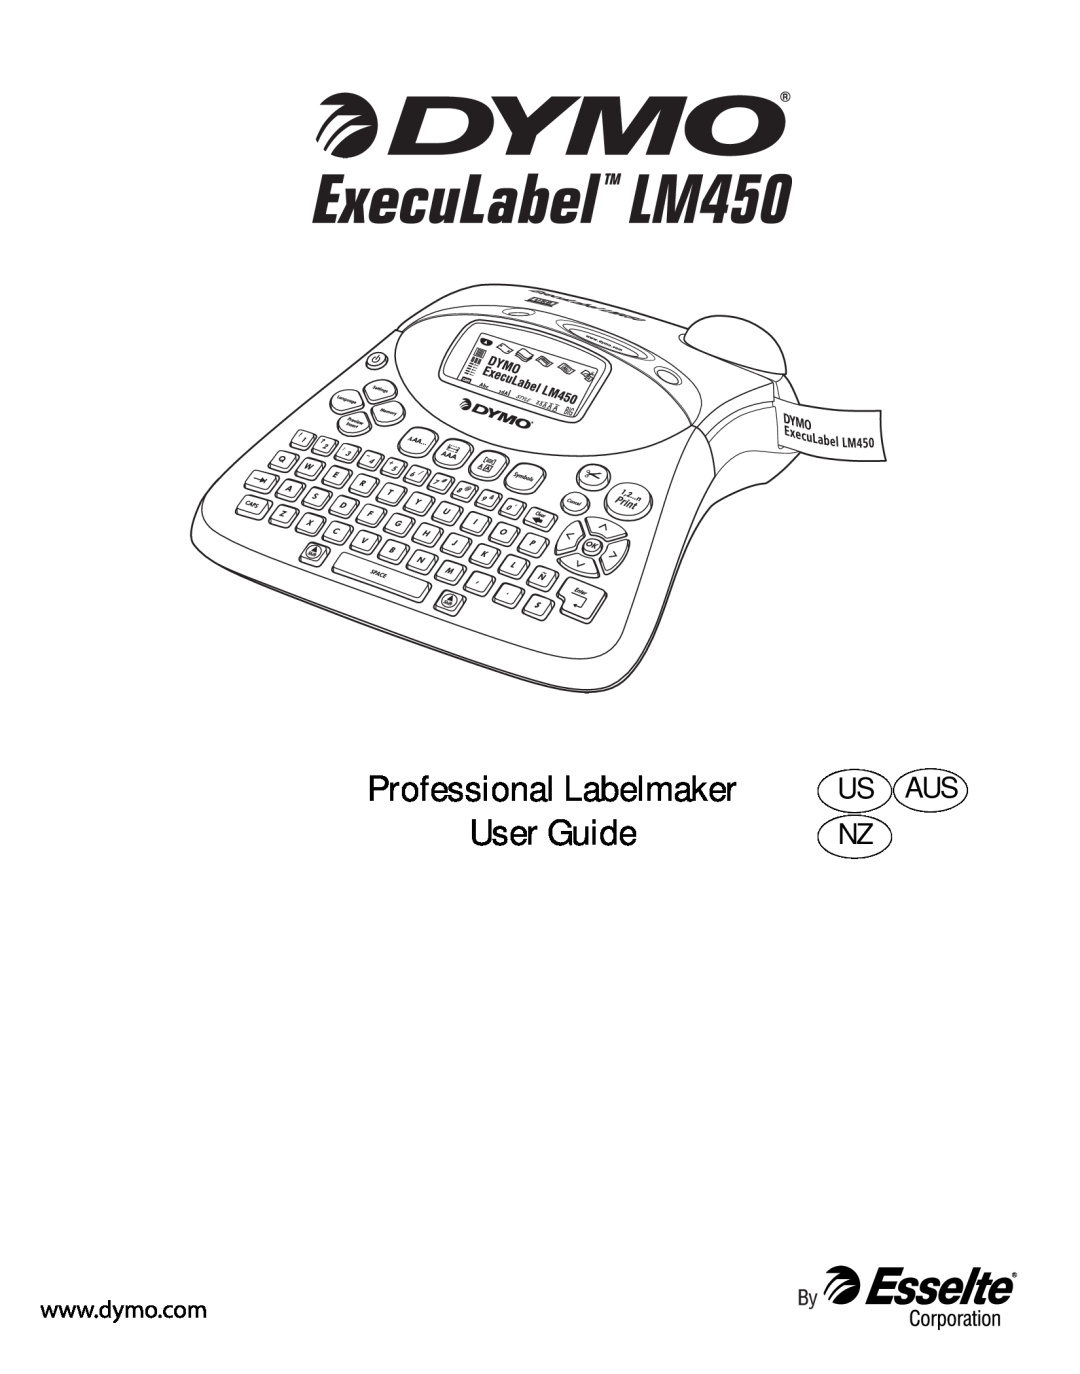 Dymo LM450 manual User Guide, Professional Labelmaker, Us Aus Nz 